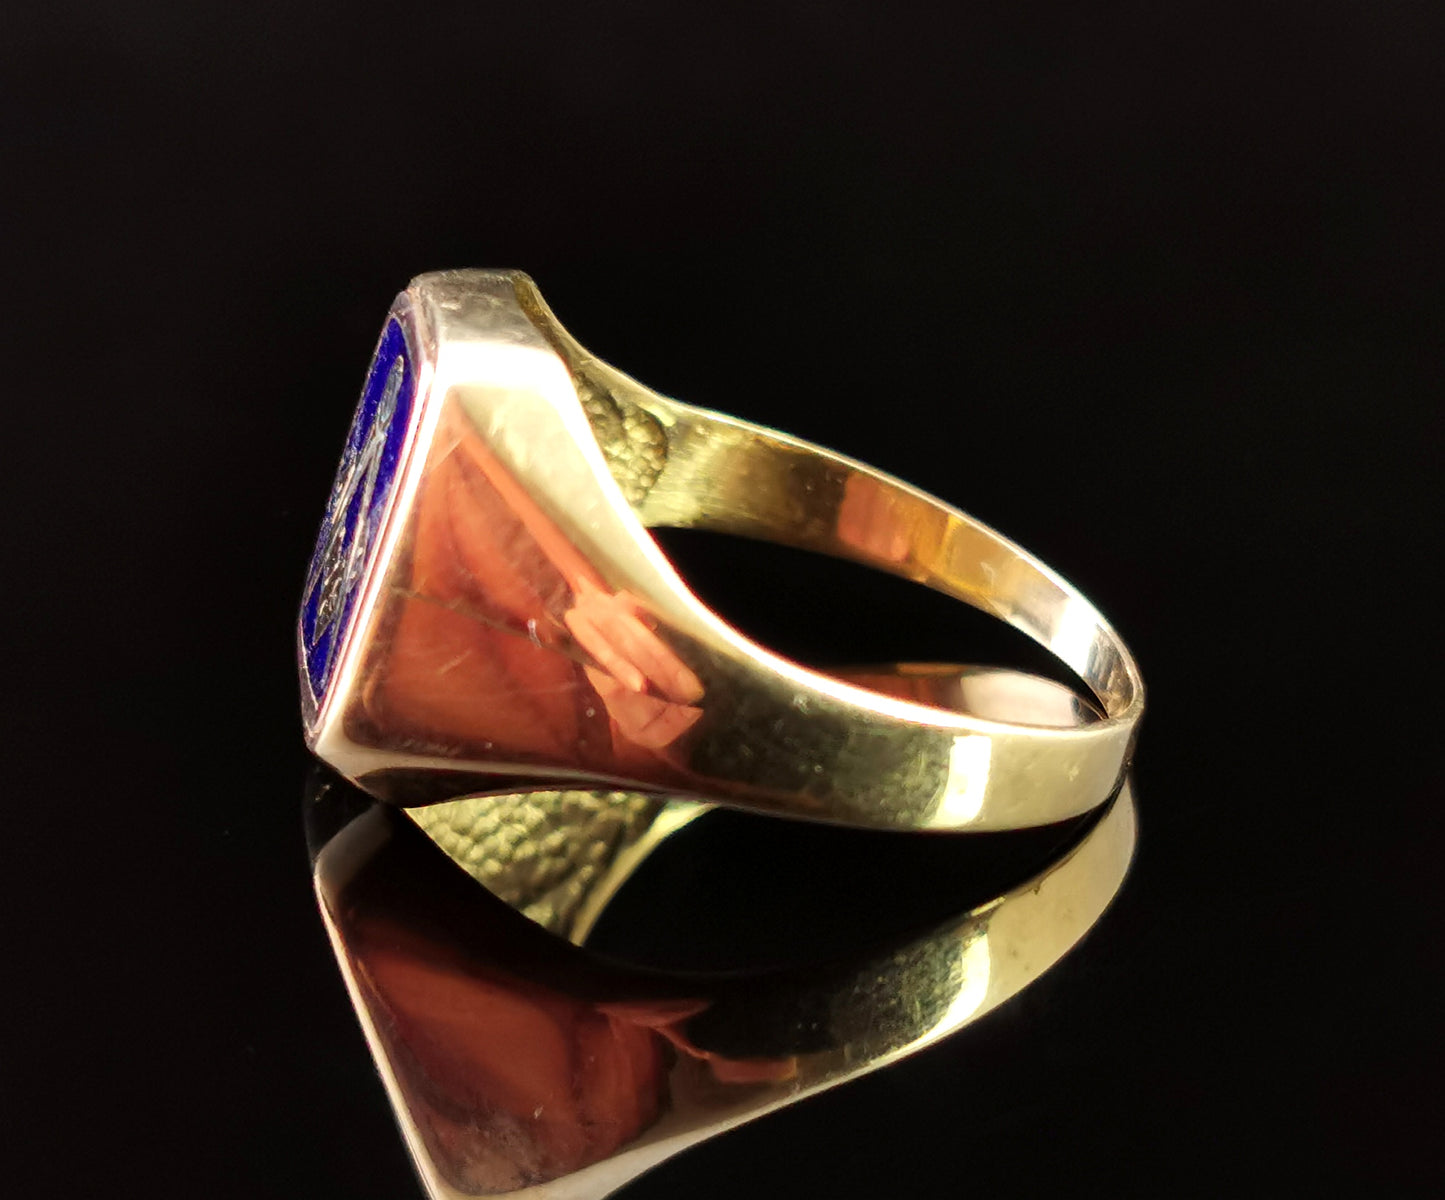 Vintage 9ct gold Masonic swivel ring, signet, blue enamel